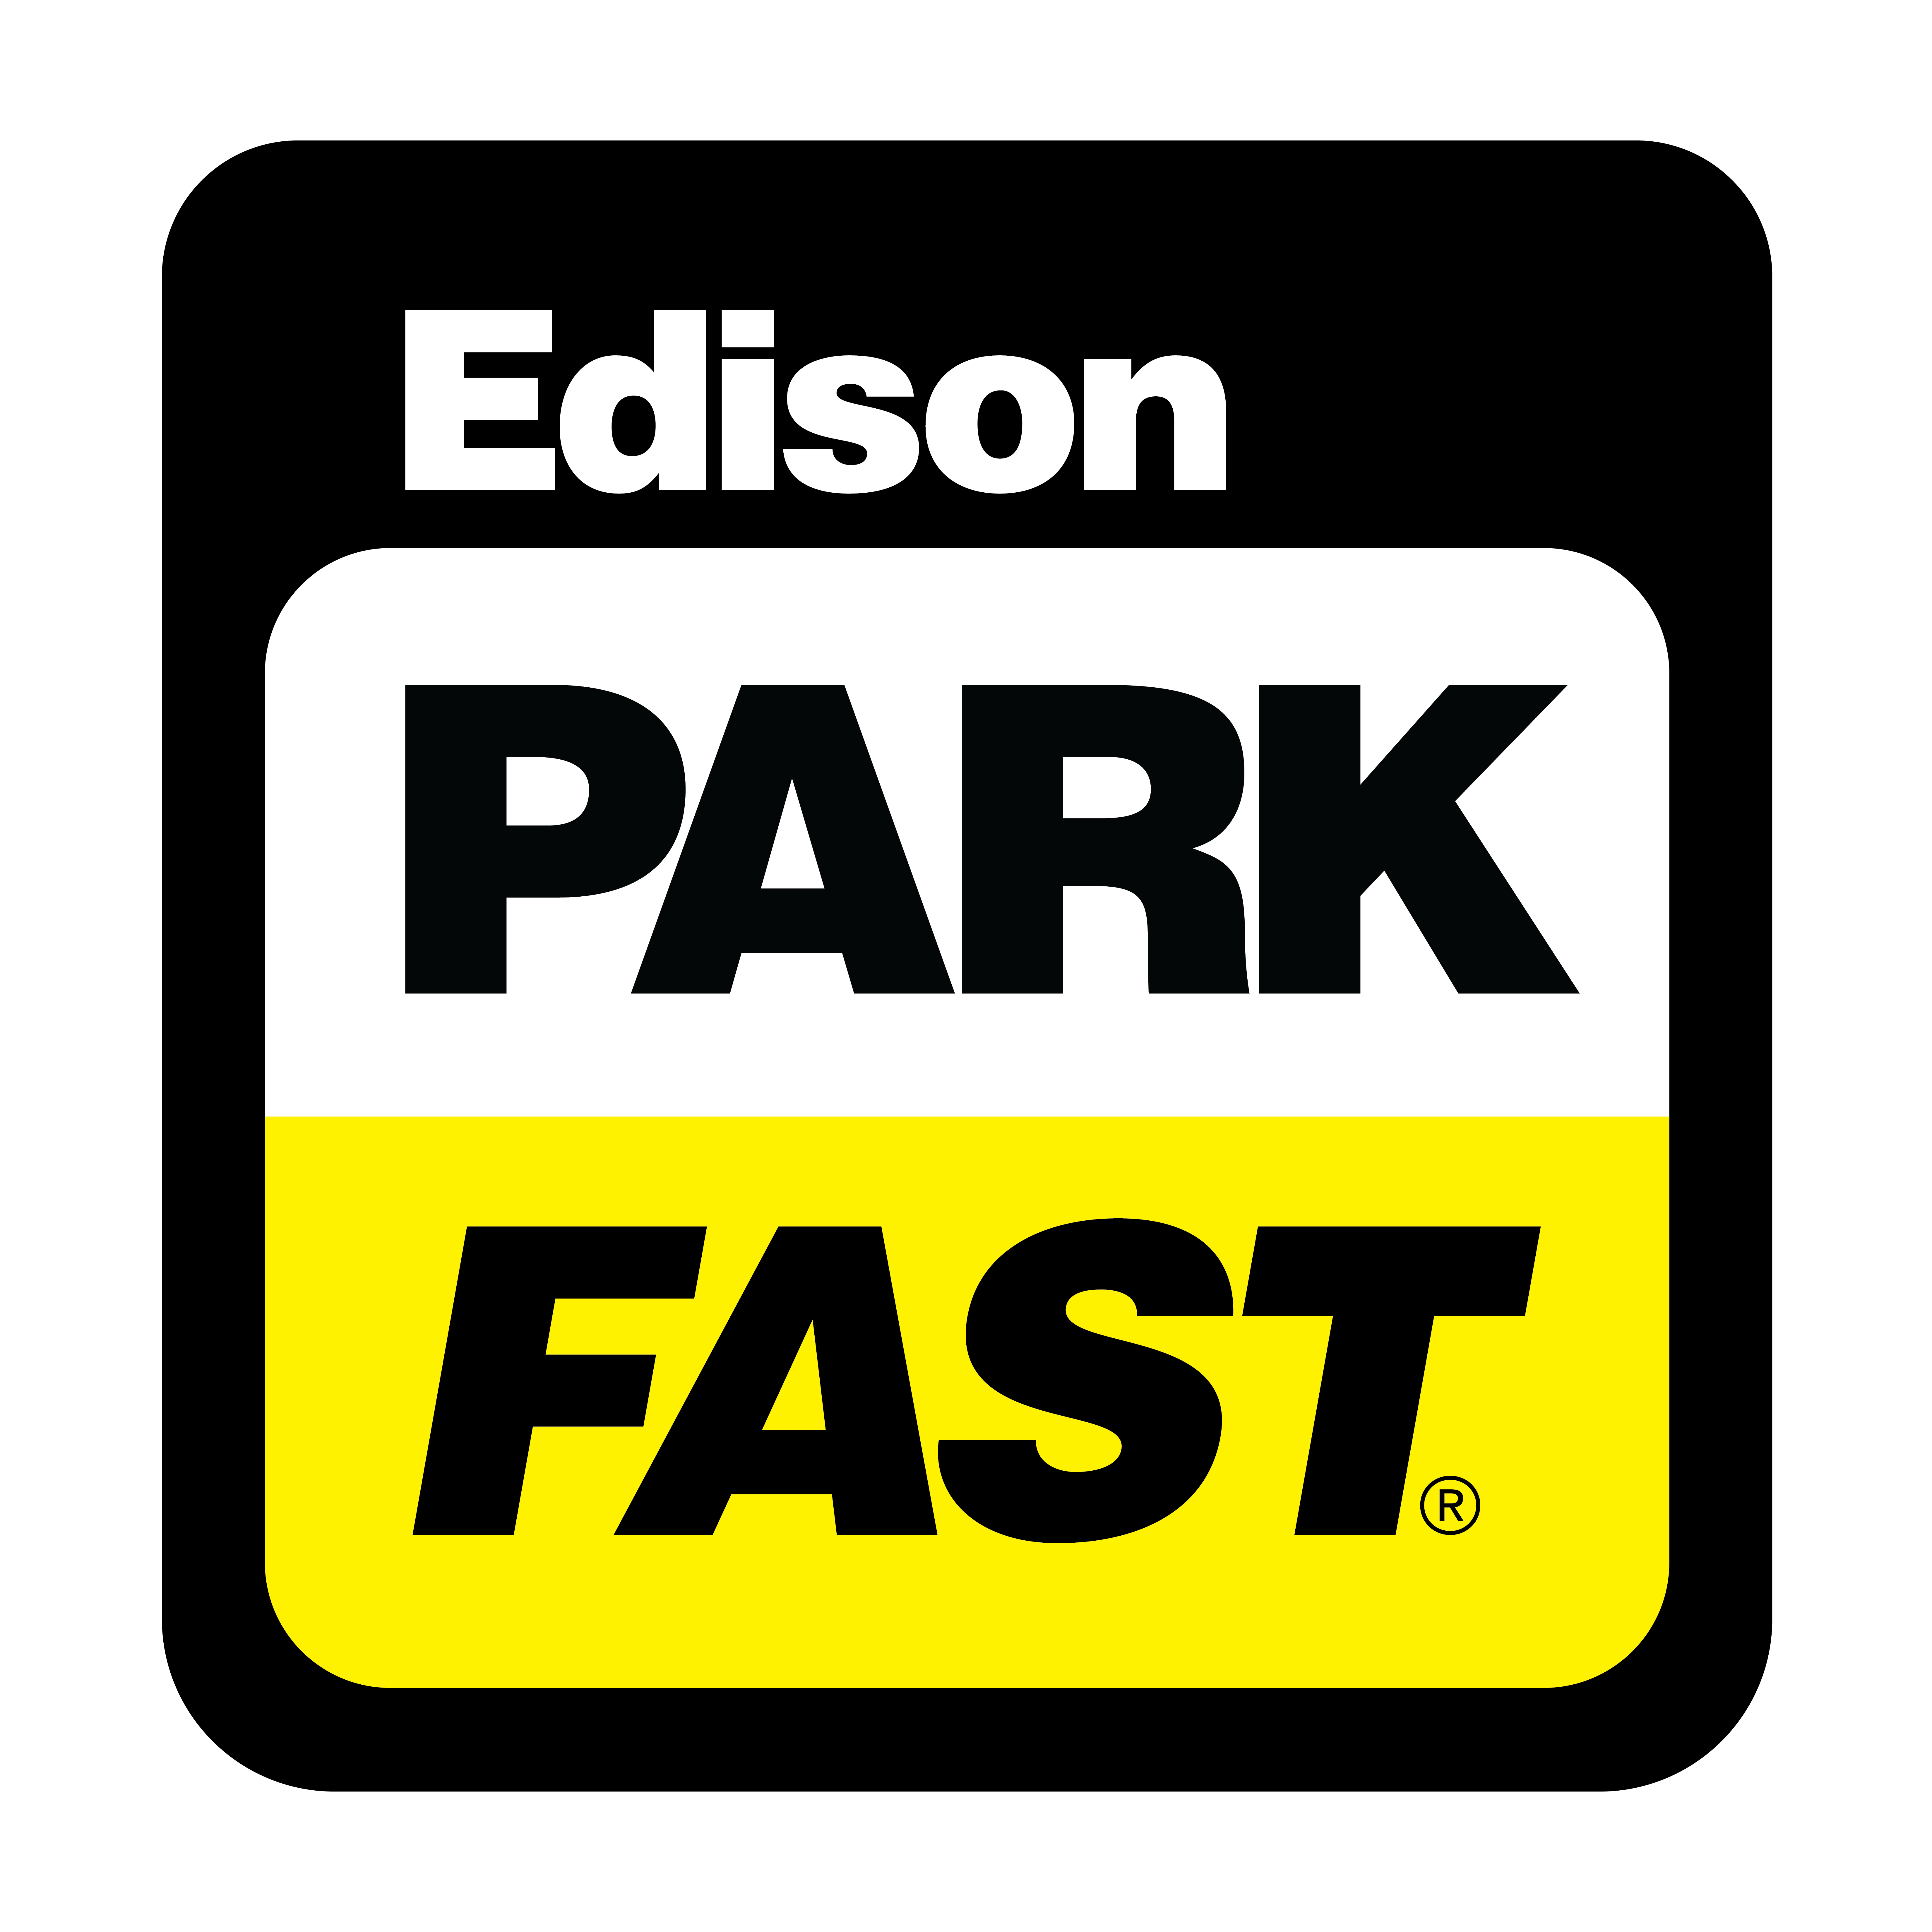 Edison ParkFast - New York, NY 10003 - (888)727-5327 | ShowMeLocal.com